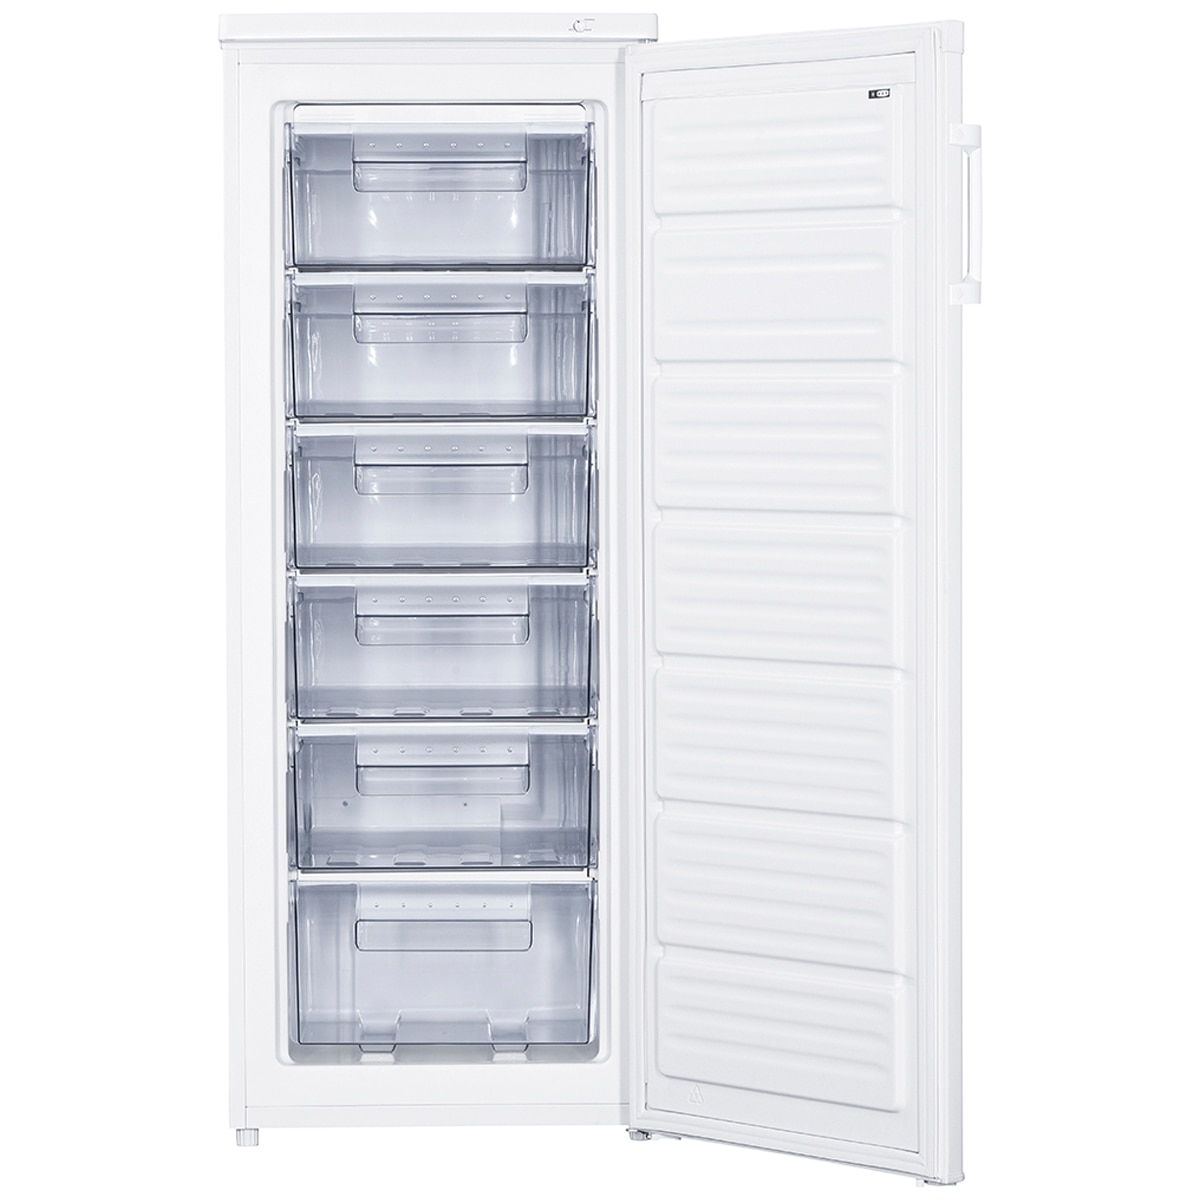 Upright Freezer Costco With Drawers